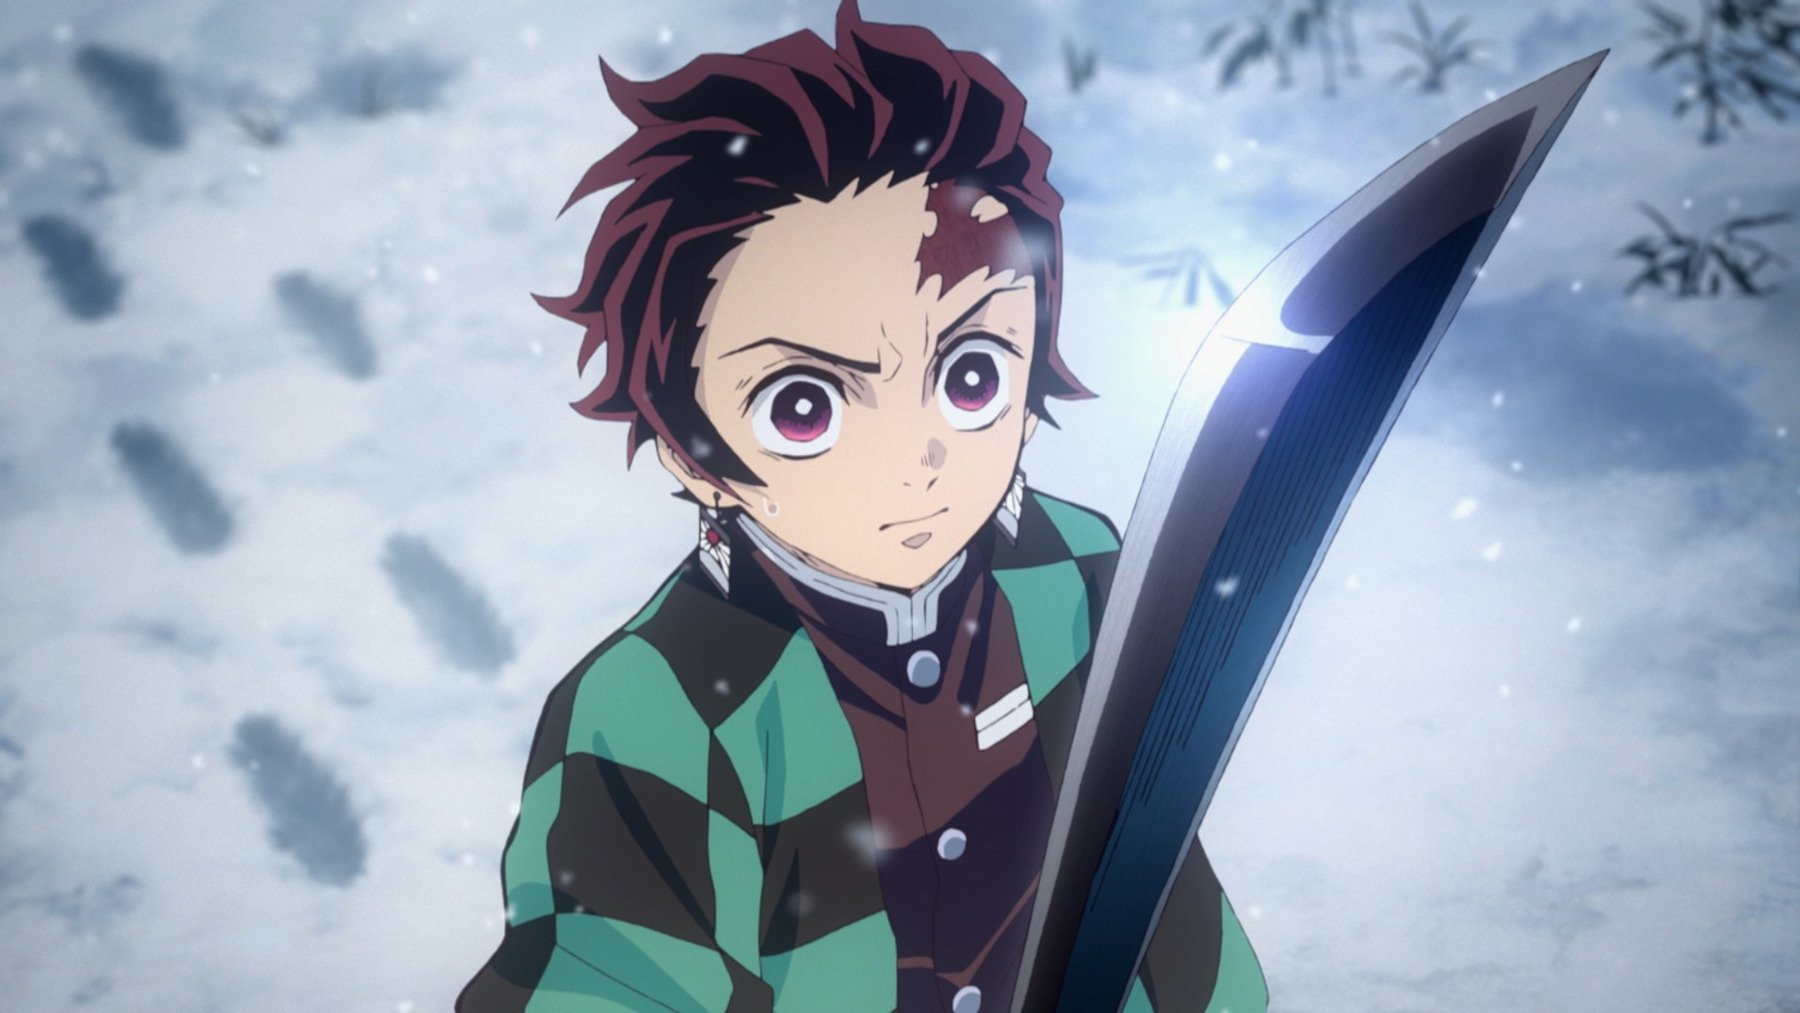 Tanjiro holding his sword in the snow in 'Demon Slayer' Season 2's Mugen Train Arc Episode 4.